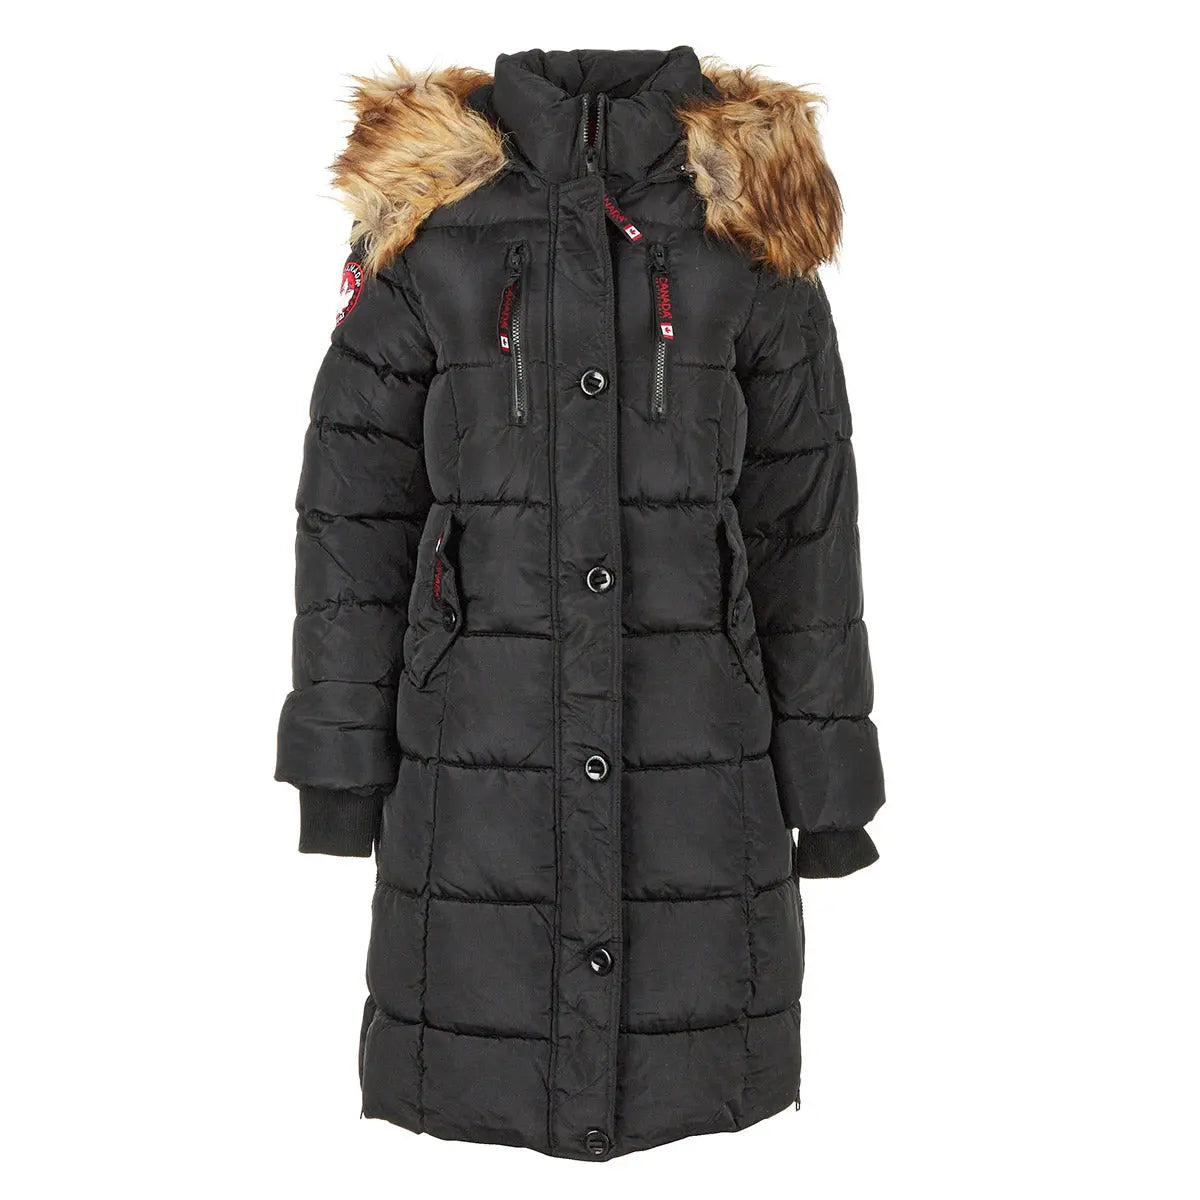 Coat CANADA WEATHER GEAR - Coats & jackets